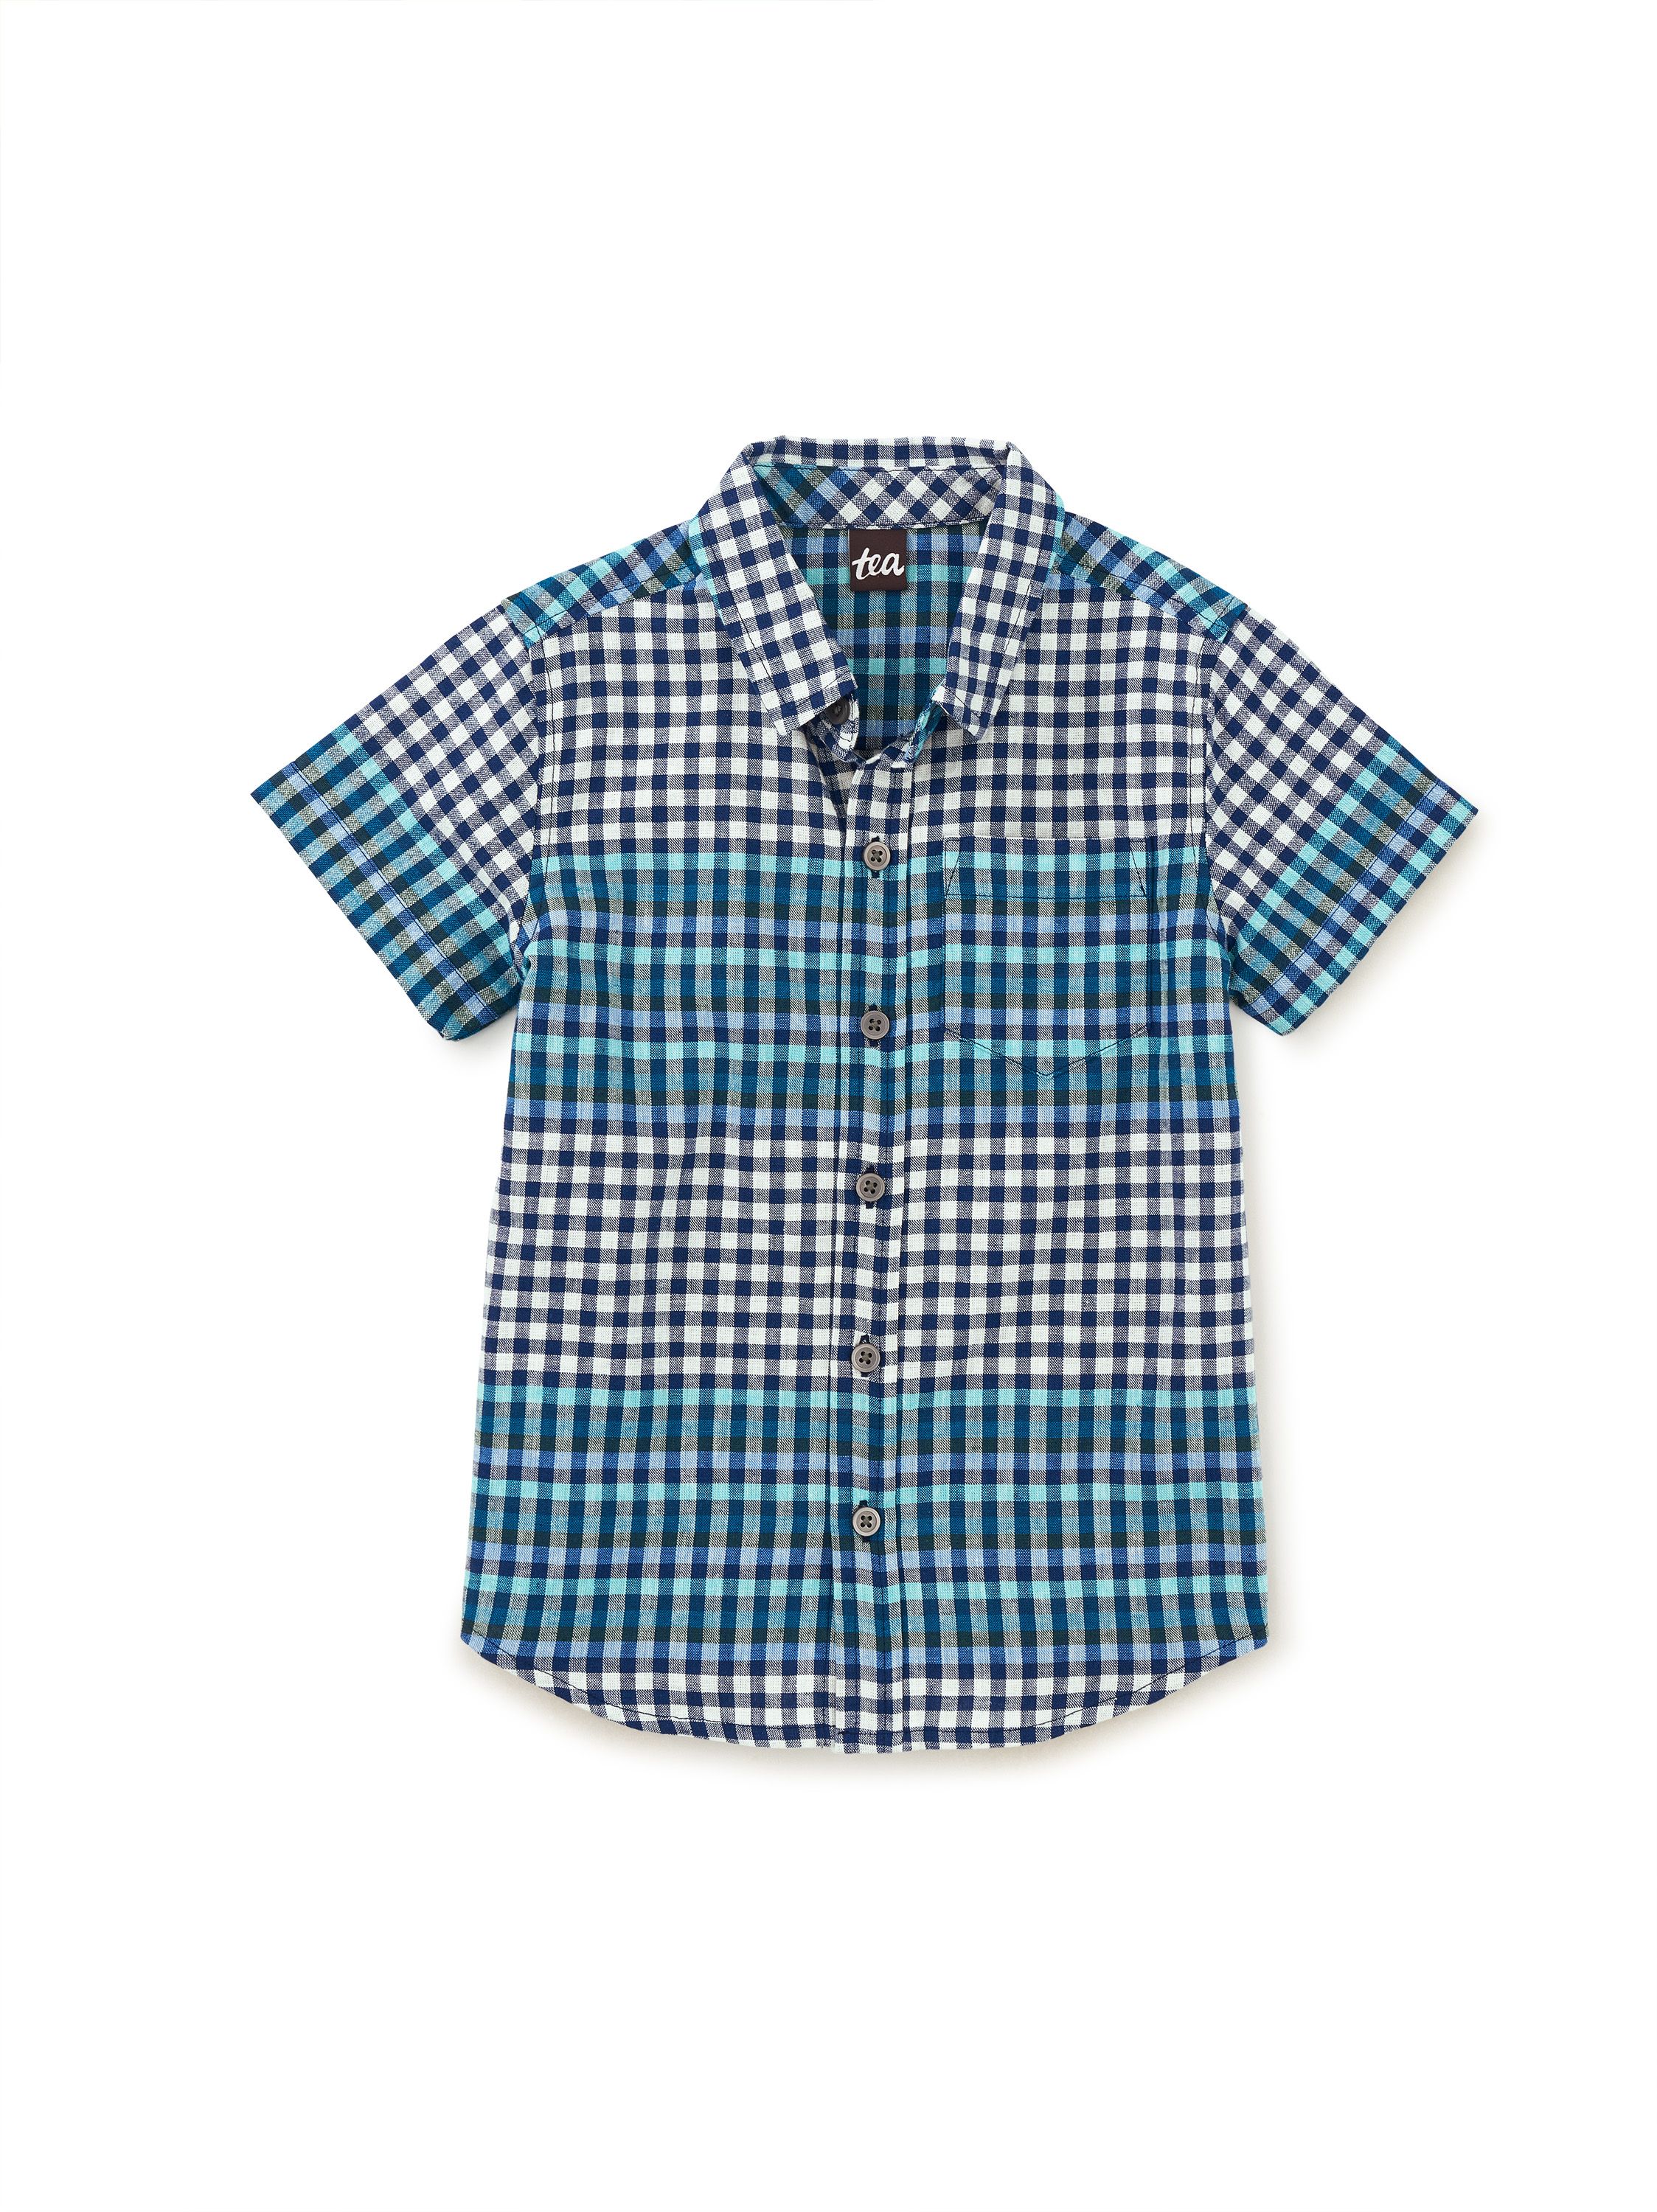 Plaid Button Up Woven Shirt | Tea Collection